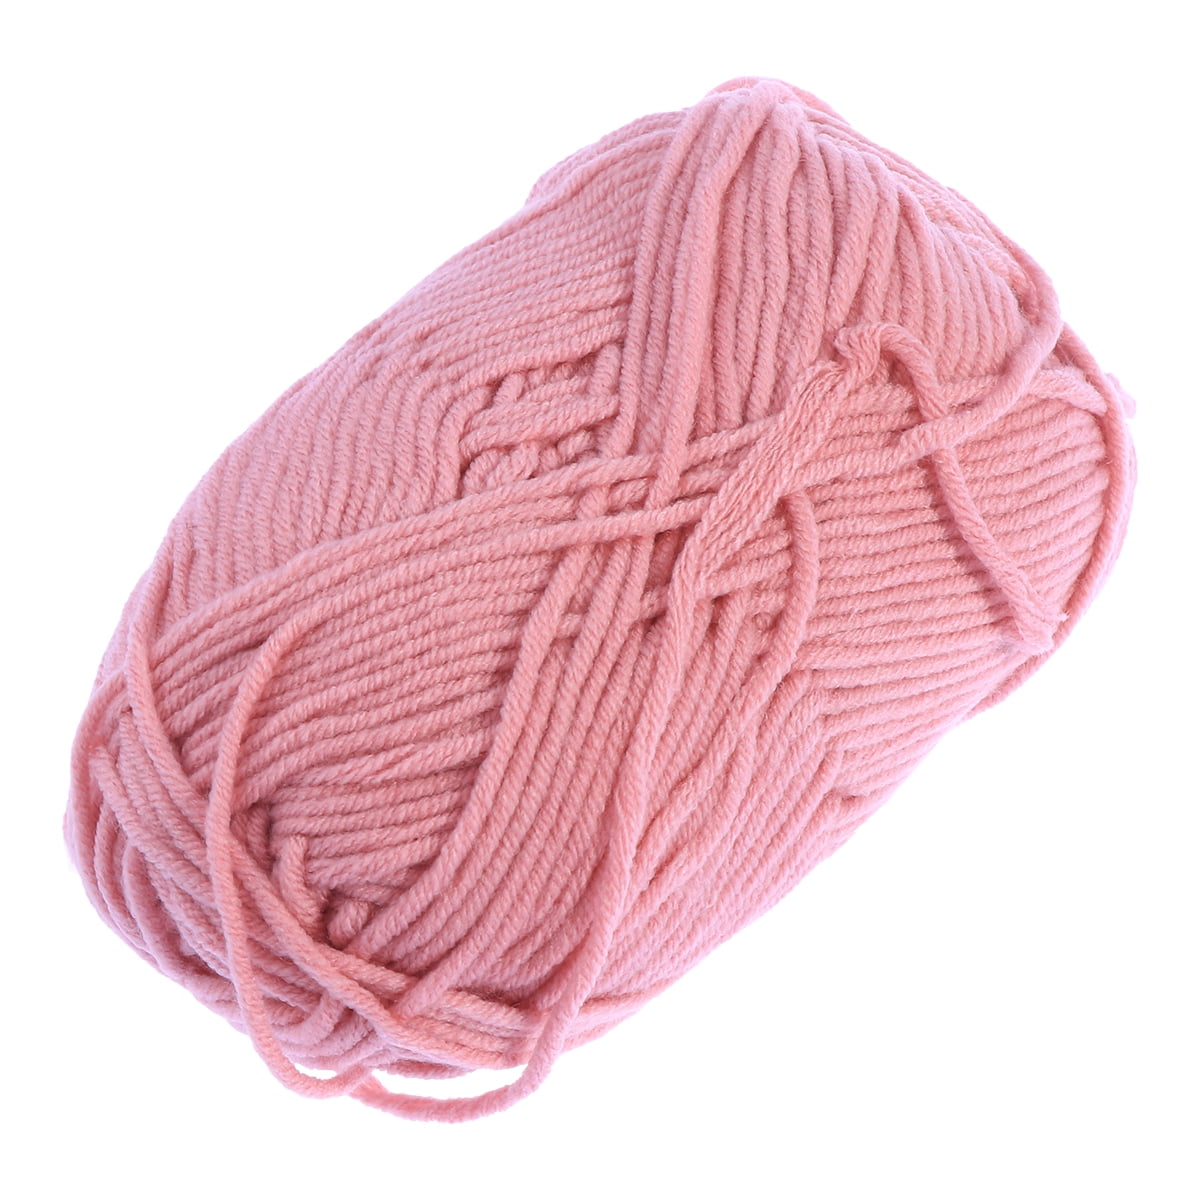 50g Milk Cotton Yarn Cotton Chunky Hand-woven Crochet Knitting Wool Yarn  Warm Yarn for Sweaters Hats Scarves DIY (Green) 